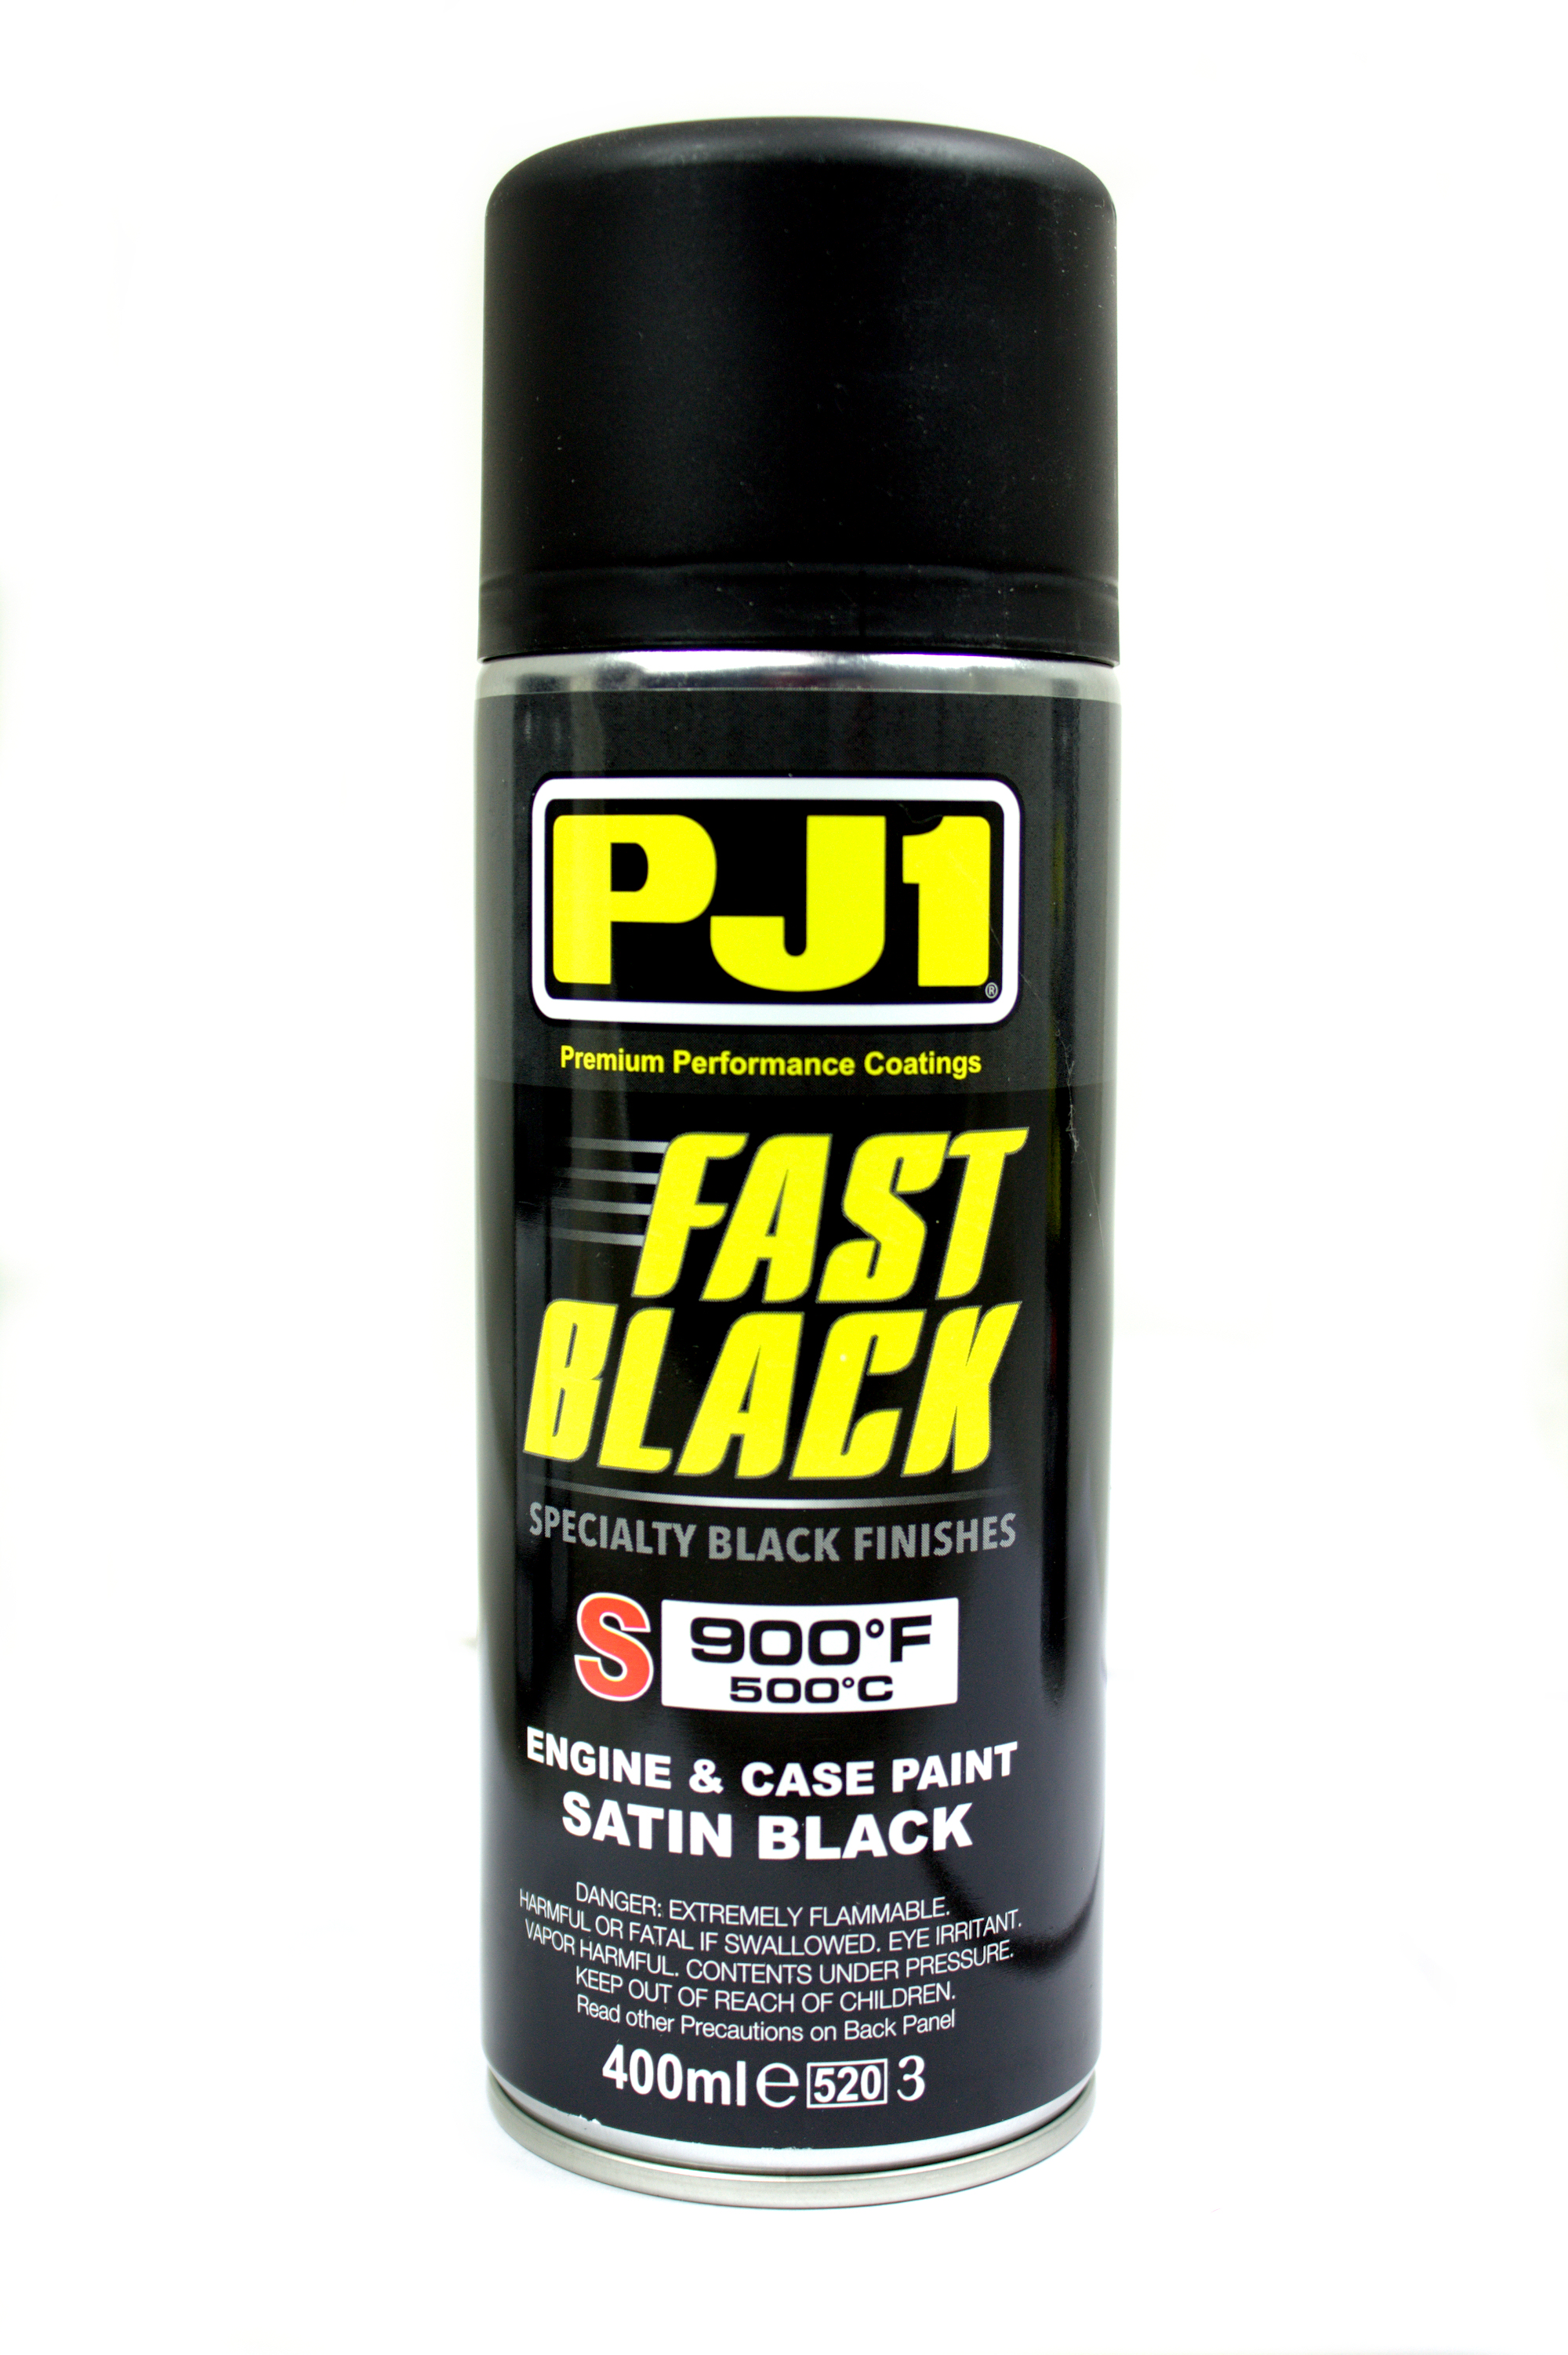 PJ1 Fast Black Satin Finish 0753433